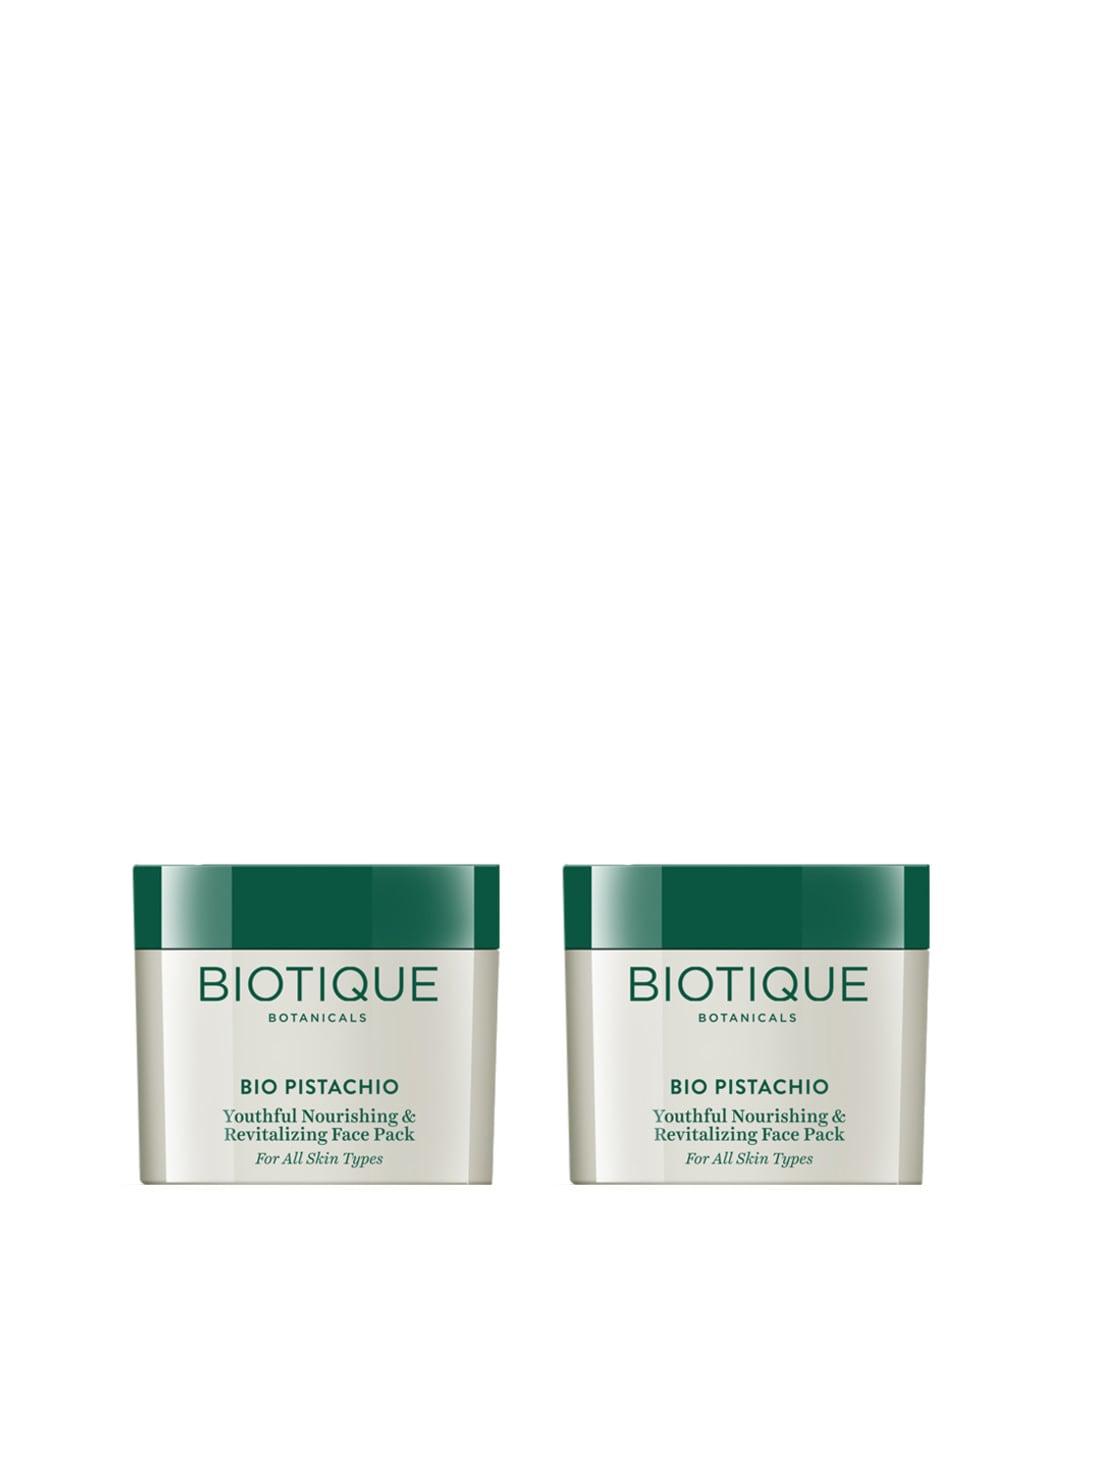 biotique-set-of-2-bio-pistachio-youthful-nourishing-&-revitalizing-face-packs